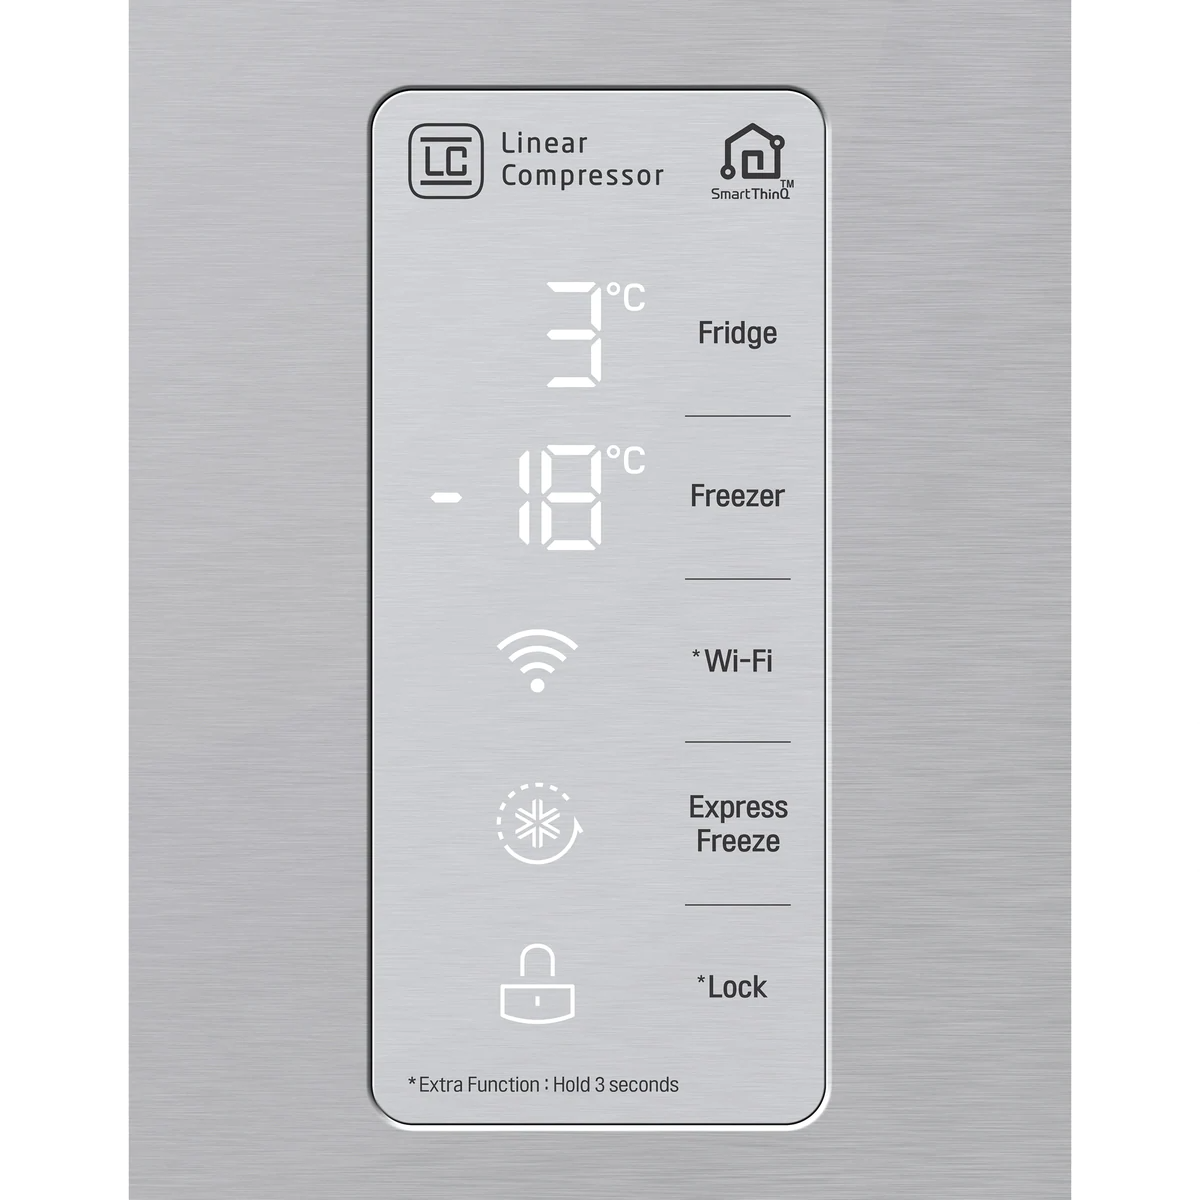 LG F522S11 對開門冰箱 464L 對門式雪櫃